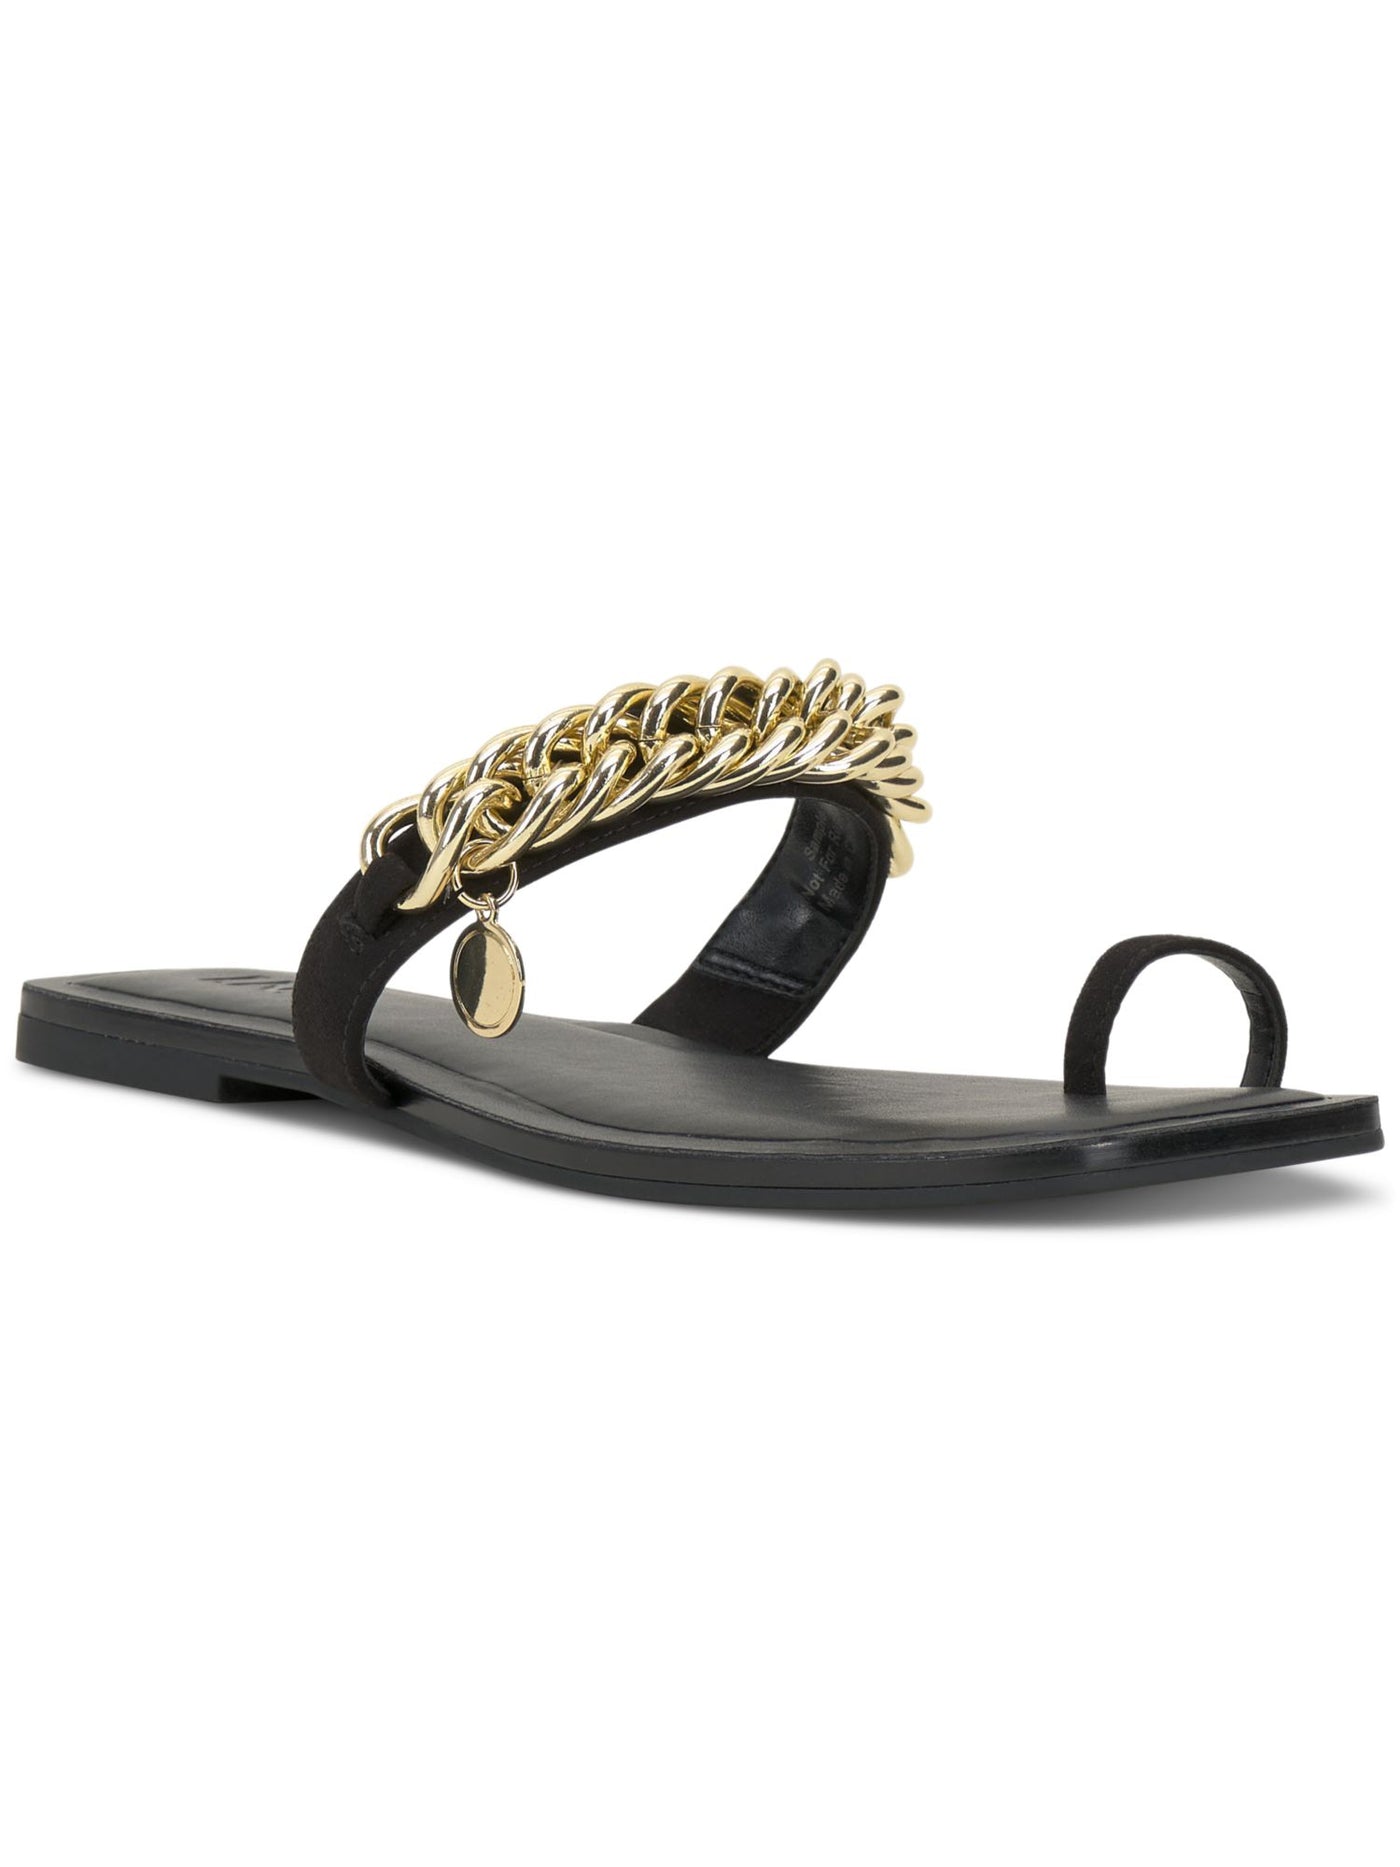 INC Womens Black Padded Chain Accent Toe Ring Slip Resistant Goring Peetie Square Toe Slip On Slide Sandals Shoes 10 M